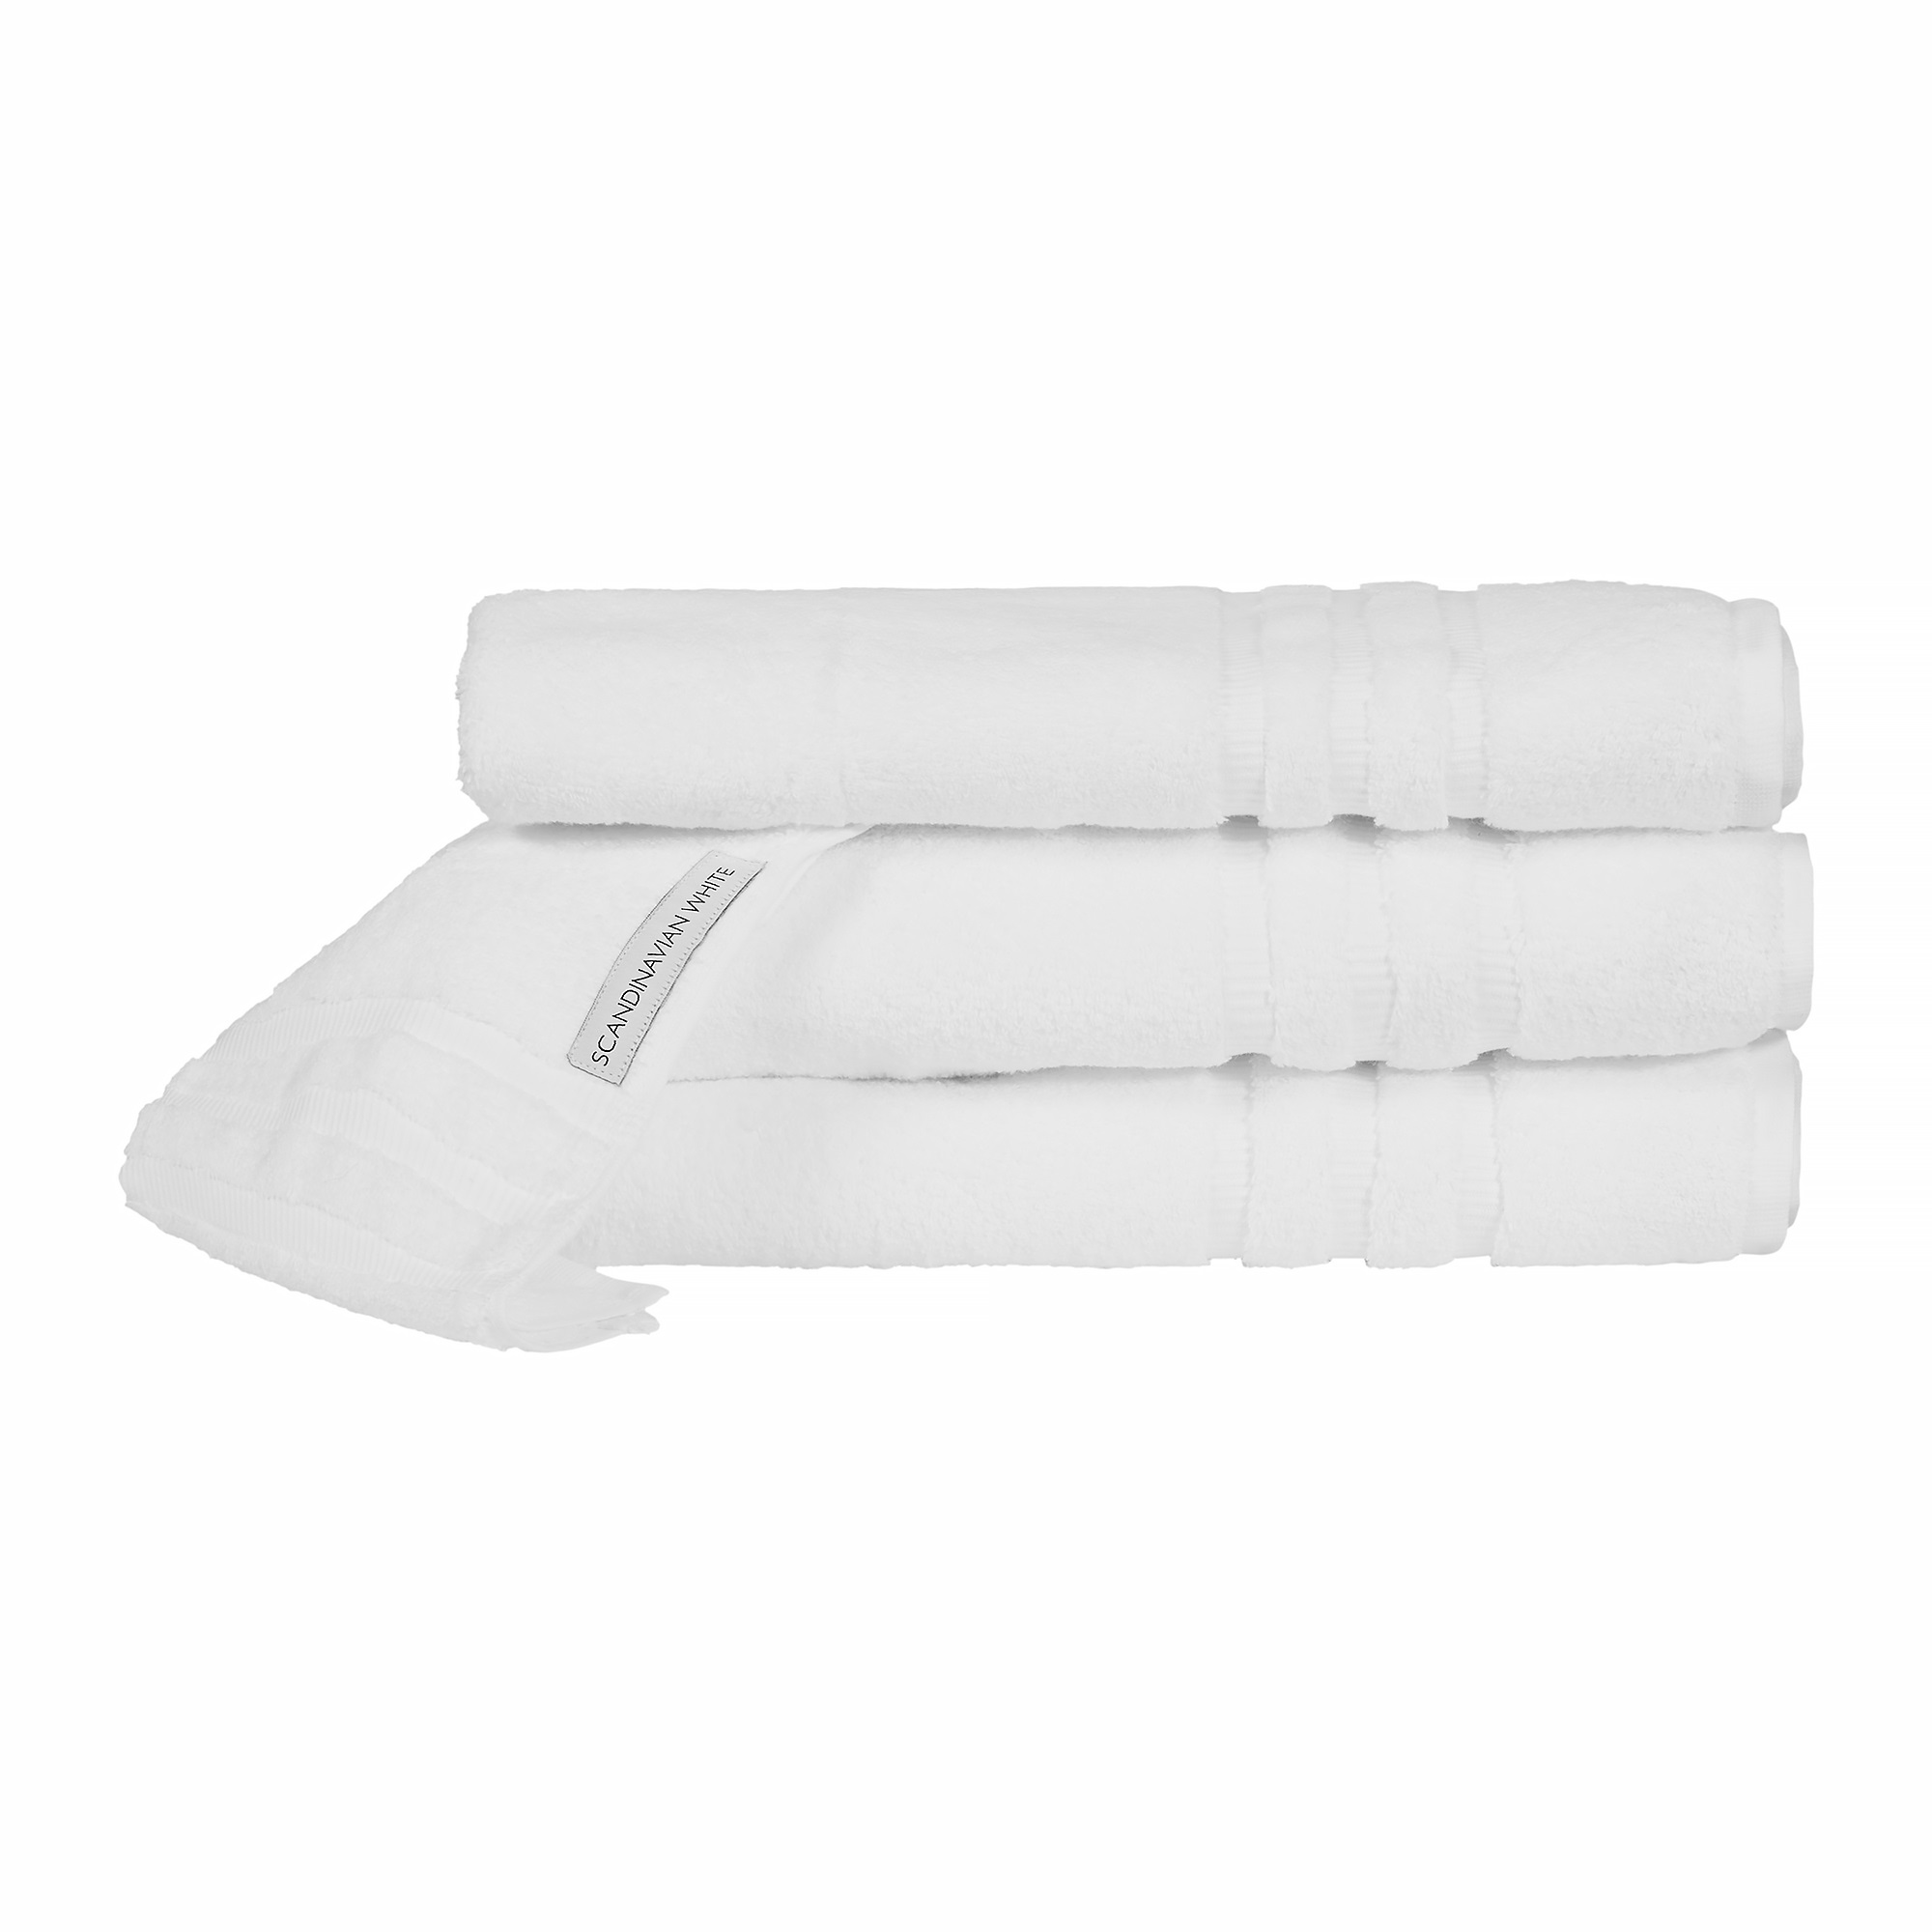 Towel Scandinavian White White 40x70 cm 600 g